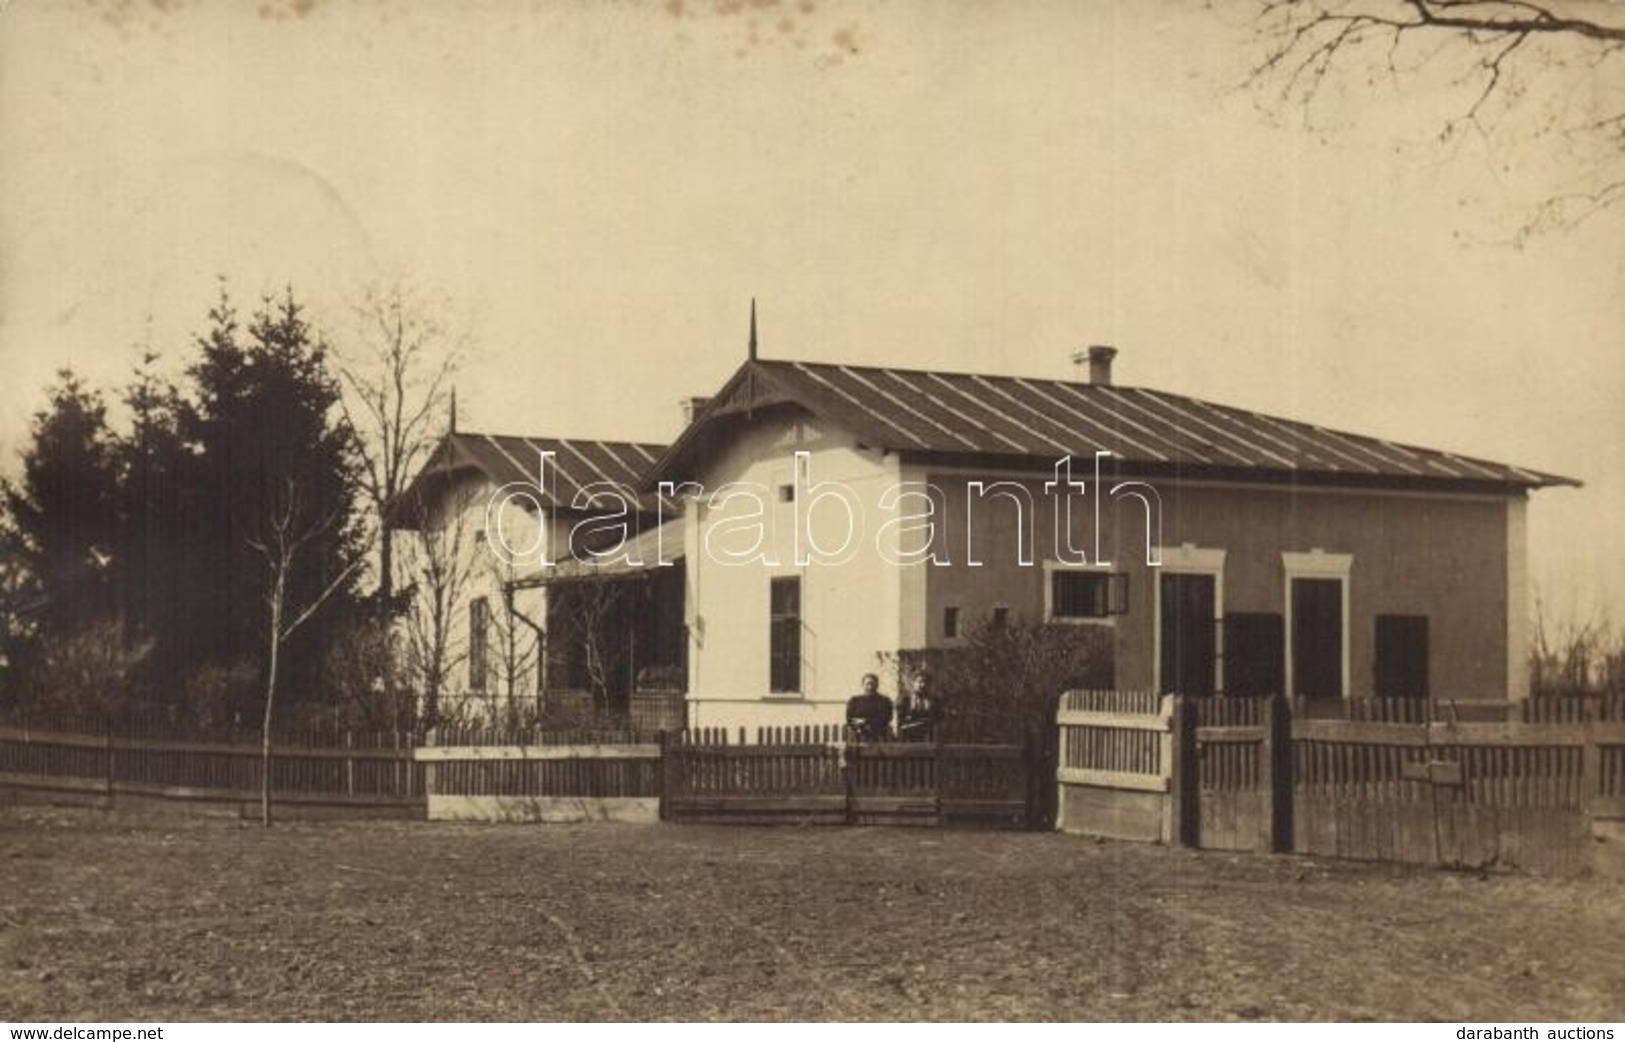 T2 ~1909 Piskolt, Piscolt; Családi Ház / Family House, Photo - Unclassified